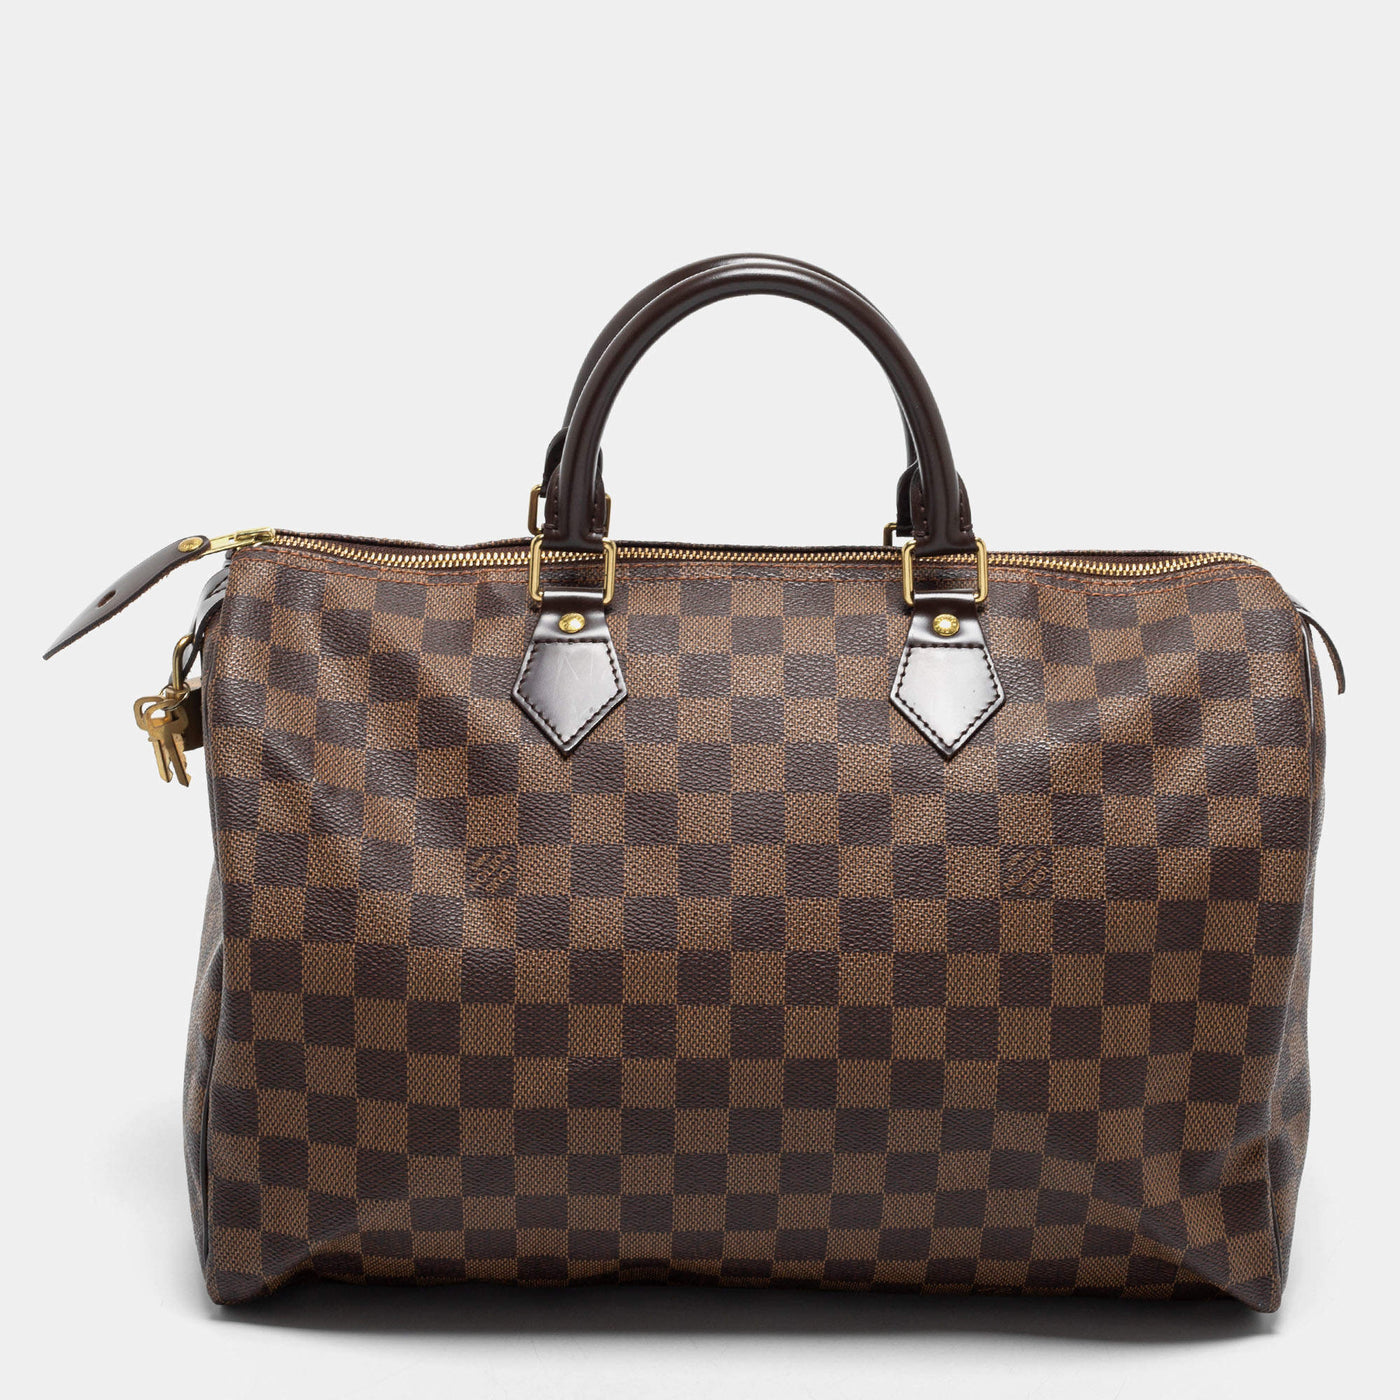 Louis Vuitton Damier Ebene Canvas Speedy 35 Bag